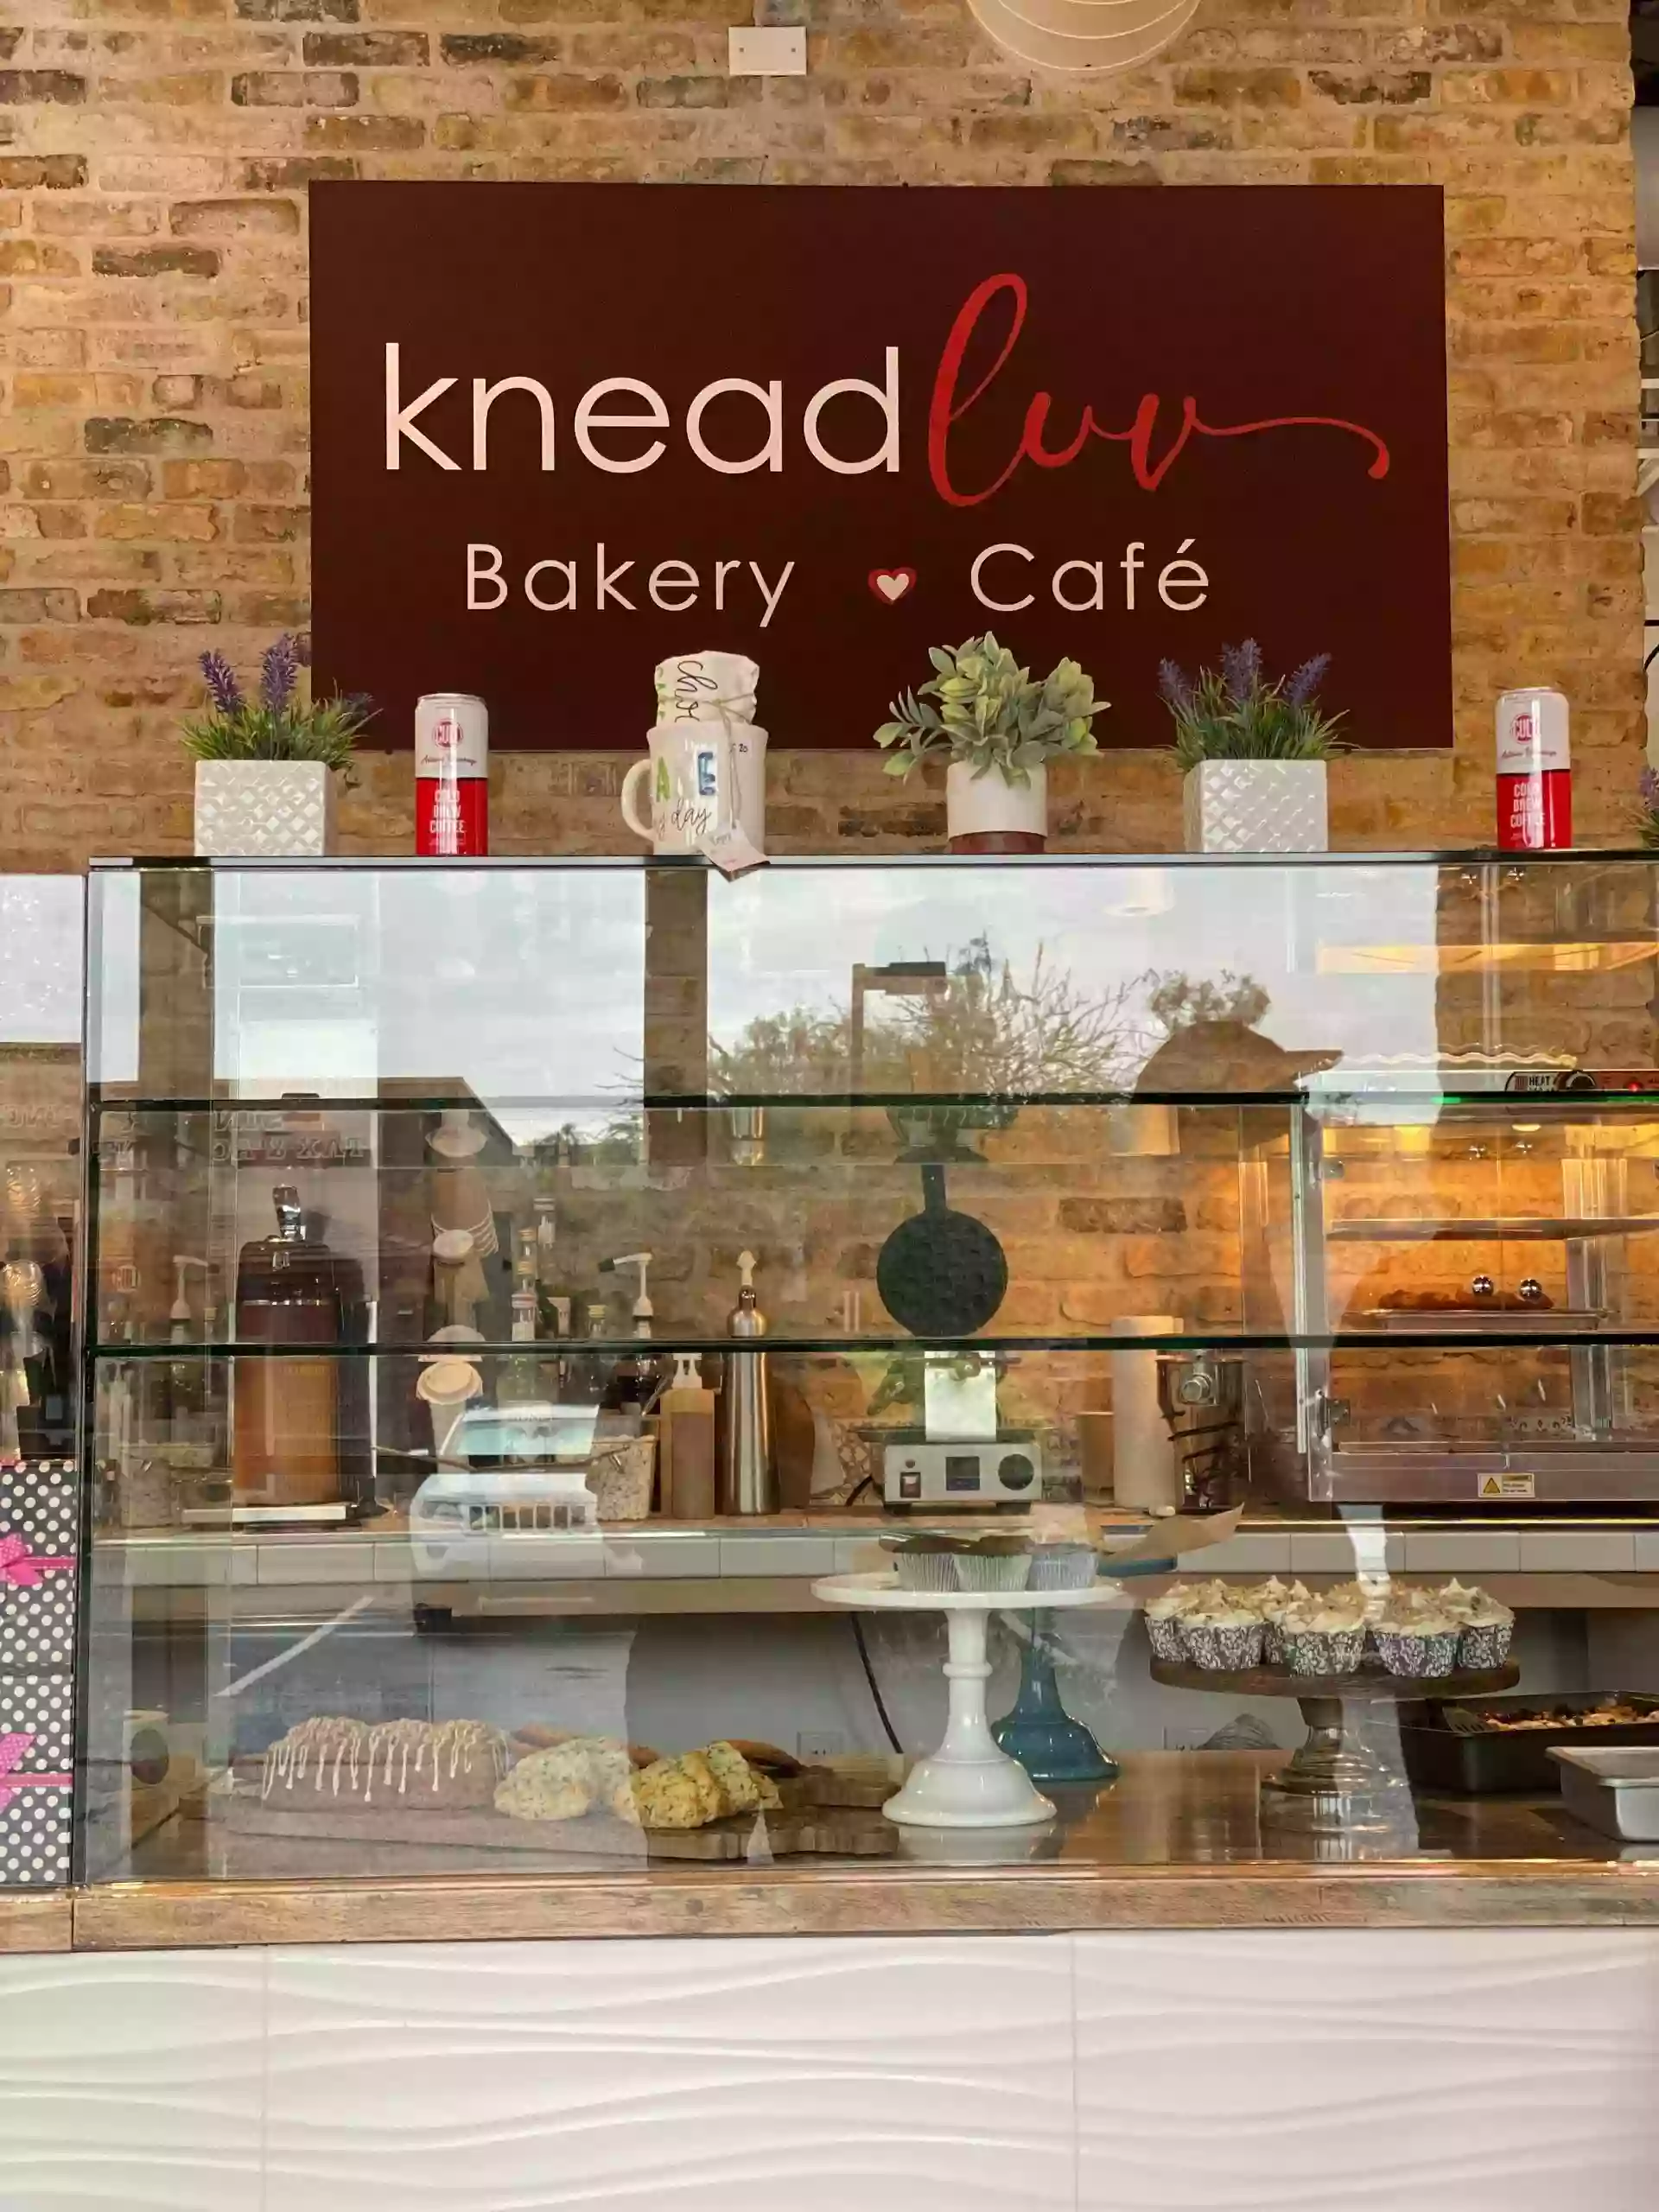 Knead Luv Bakery & Café